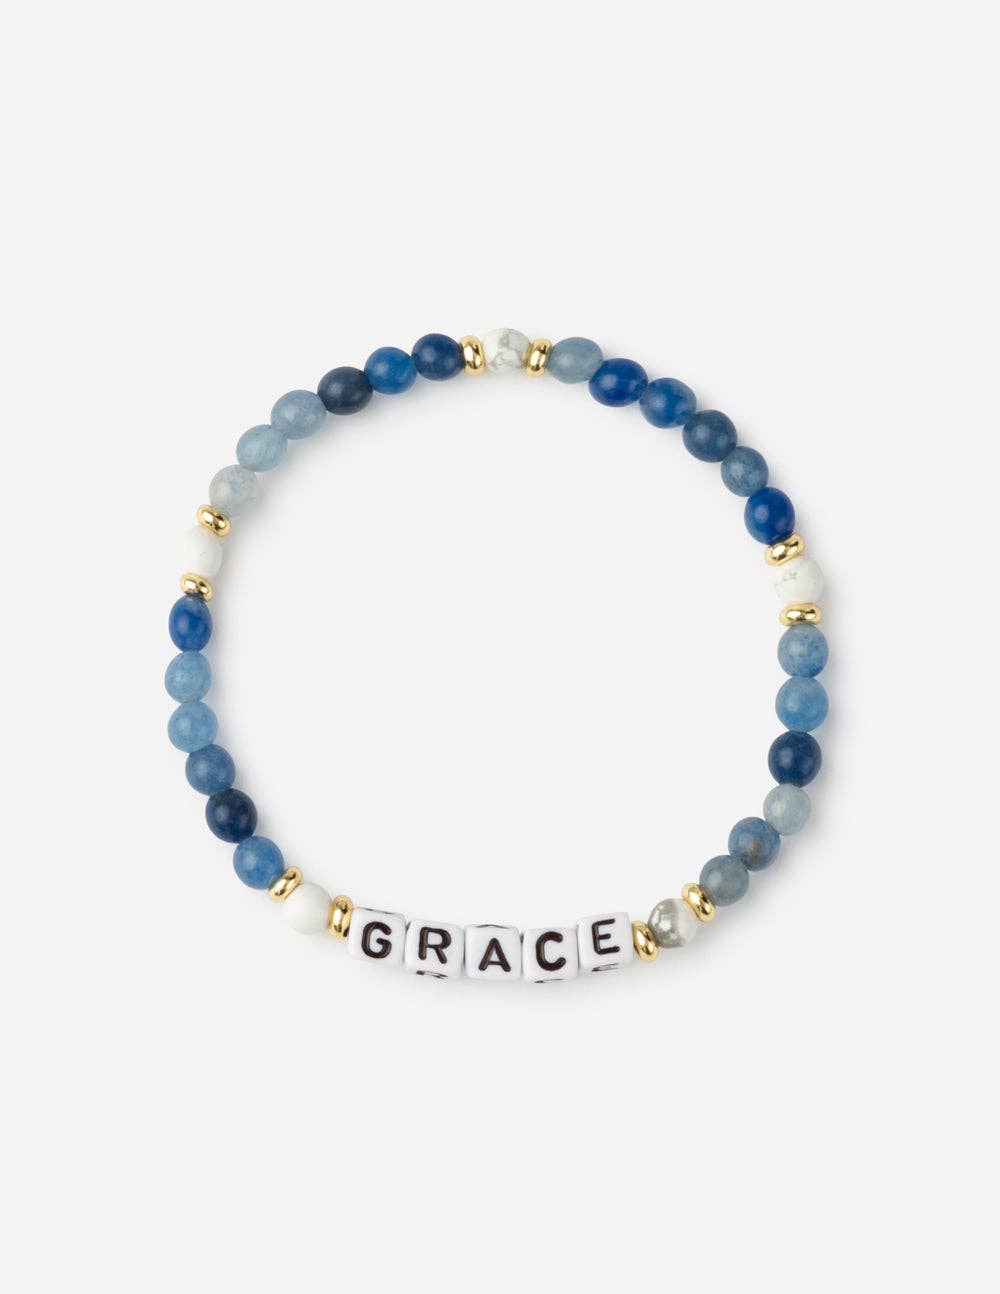 Grace Letter Bracelet: Large